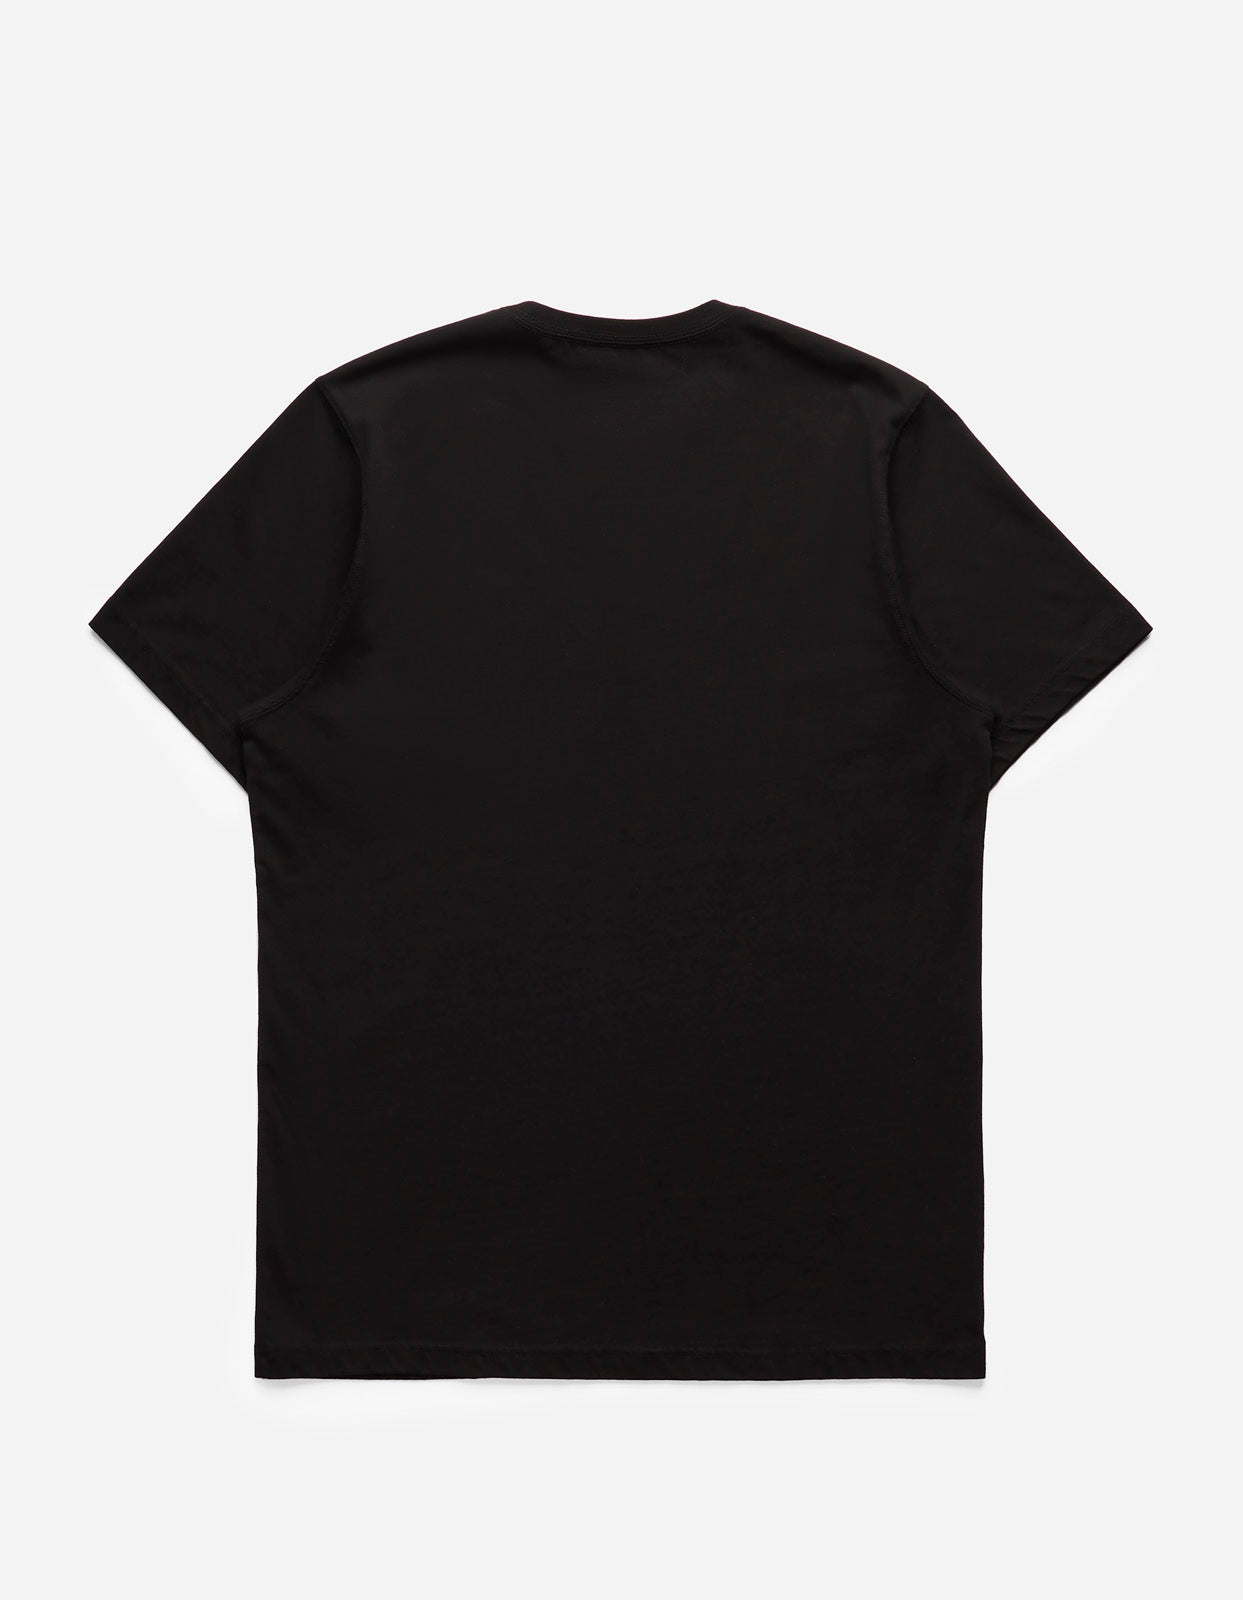 1305 Double Tigers MILTYPE T-Shirt Black